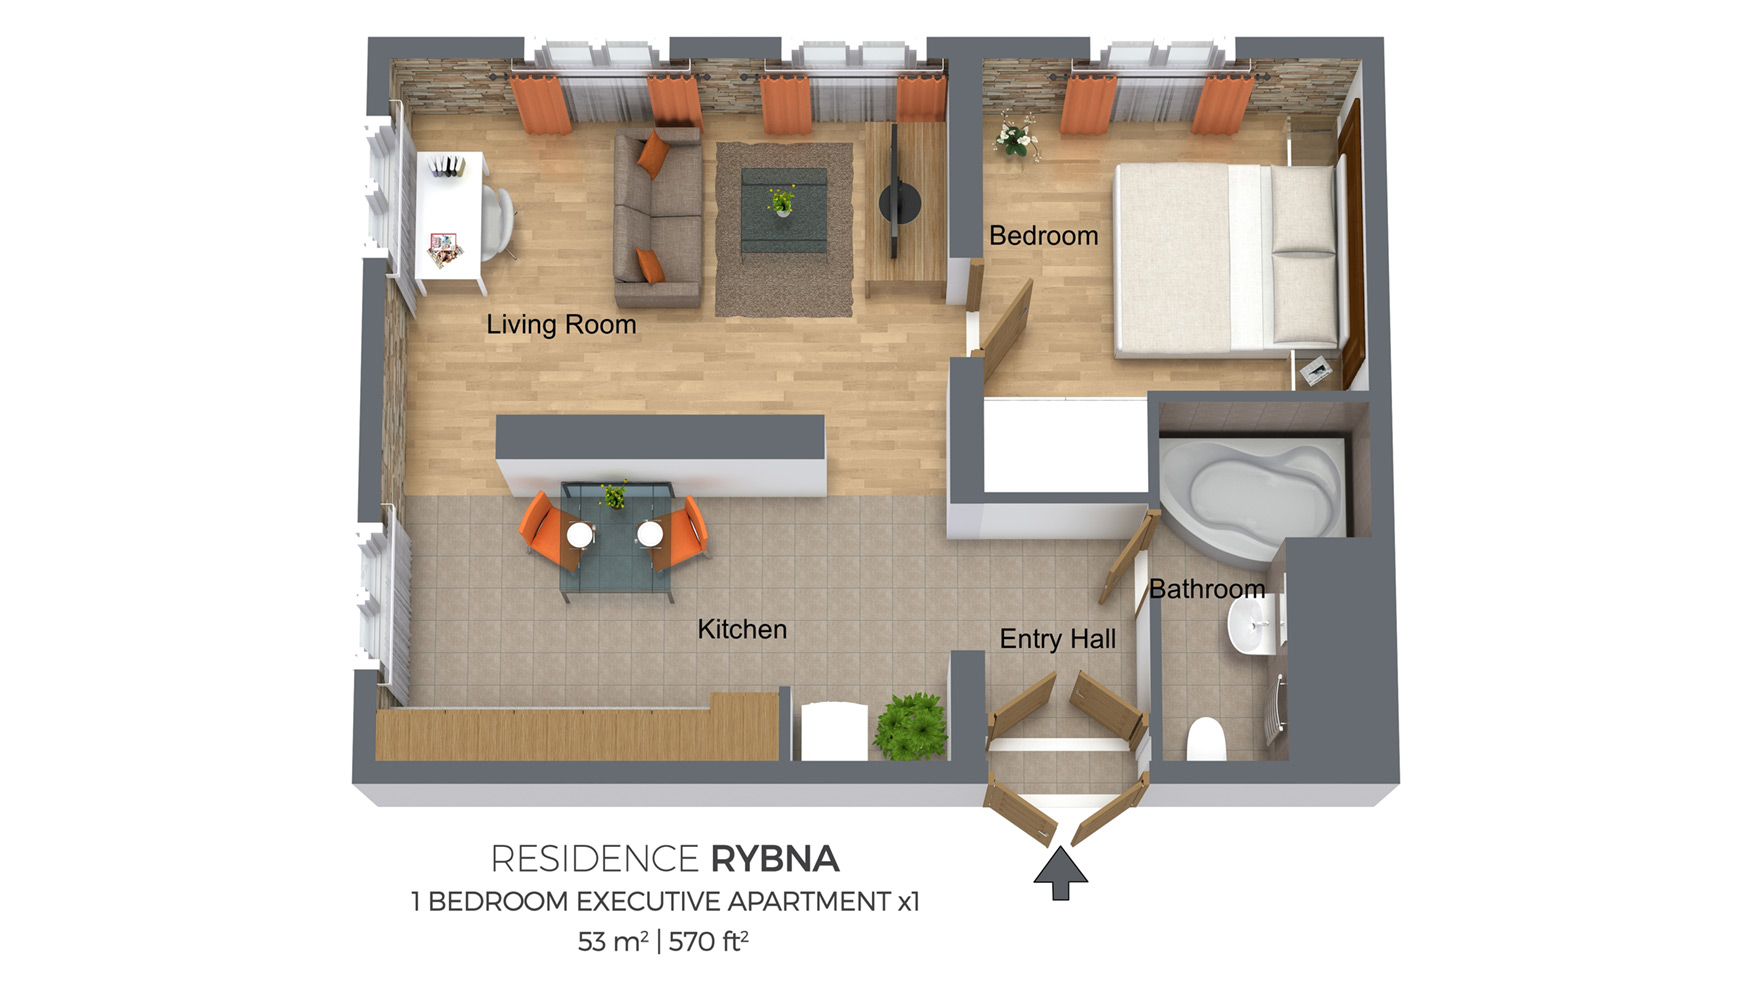 Floorplan of Residence Rybna one-bedroom apartment